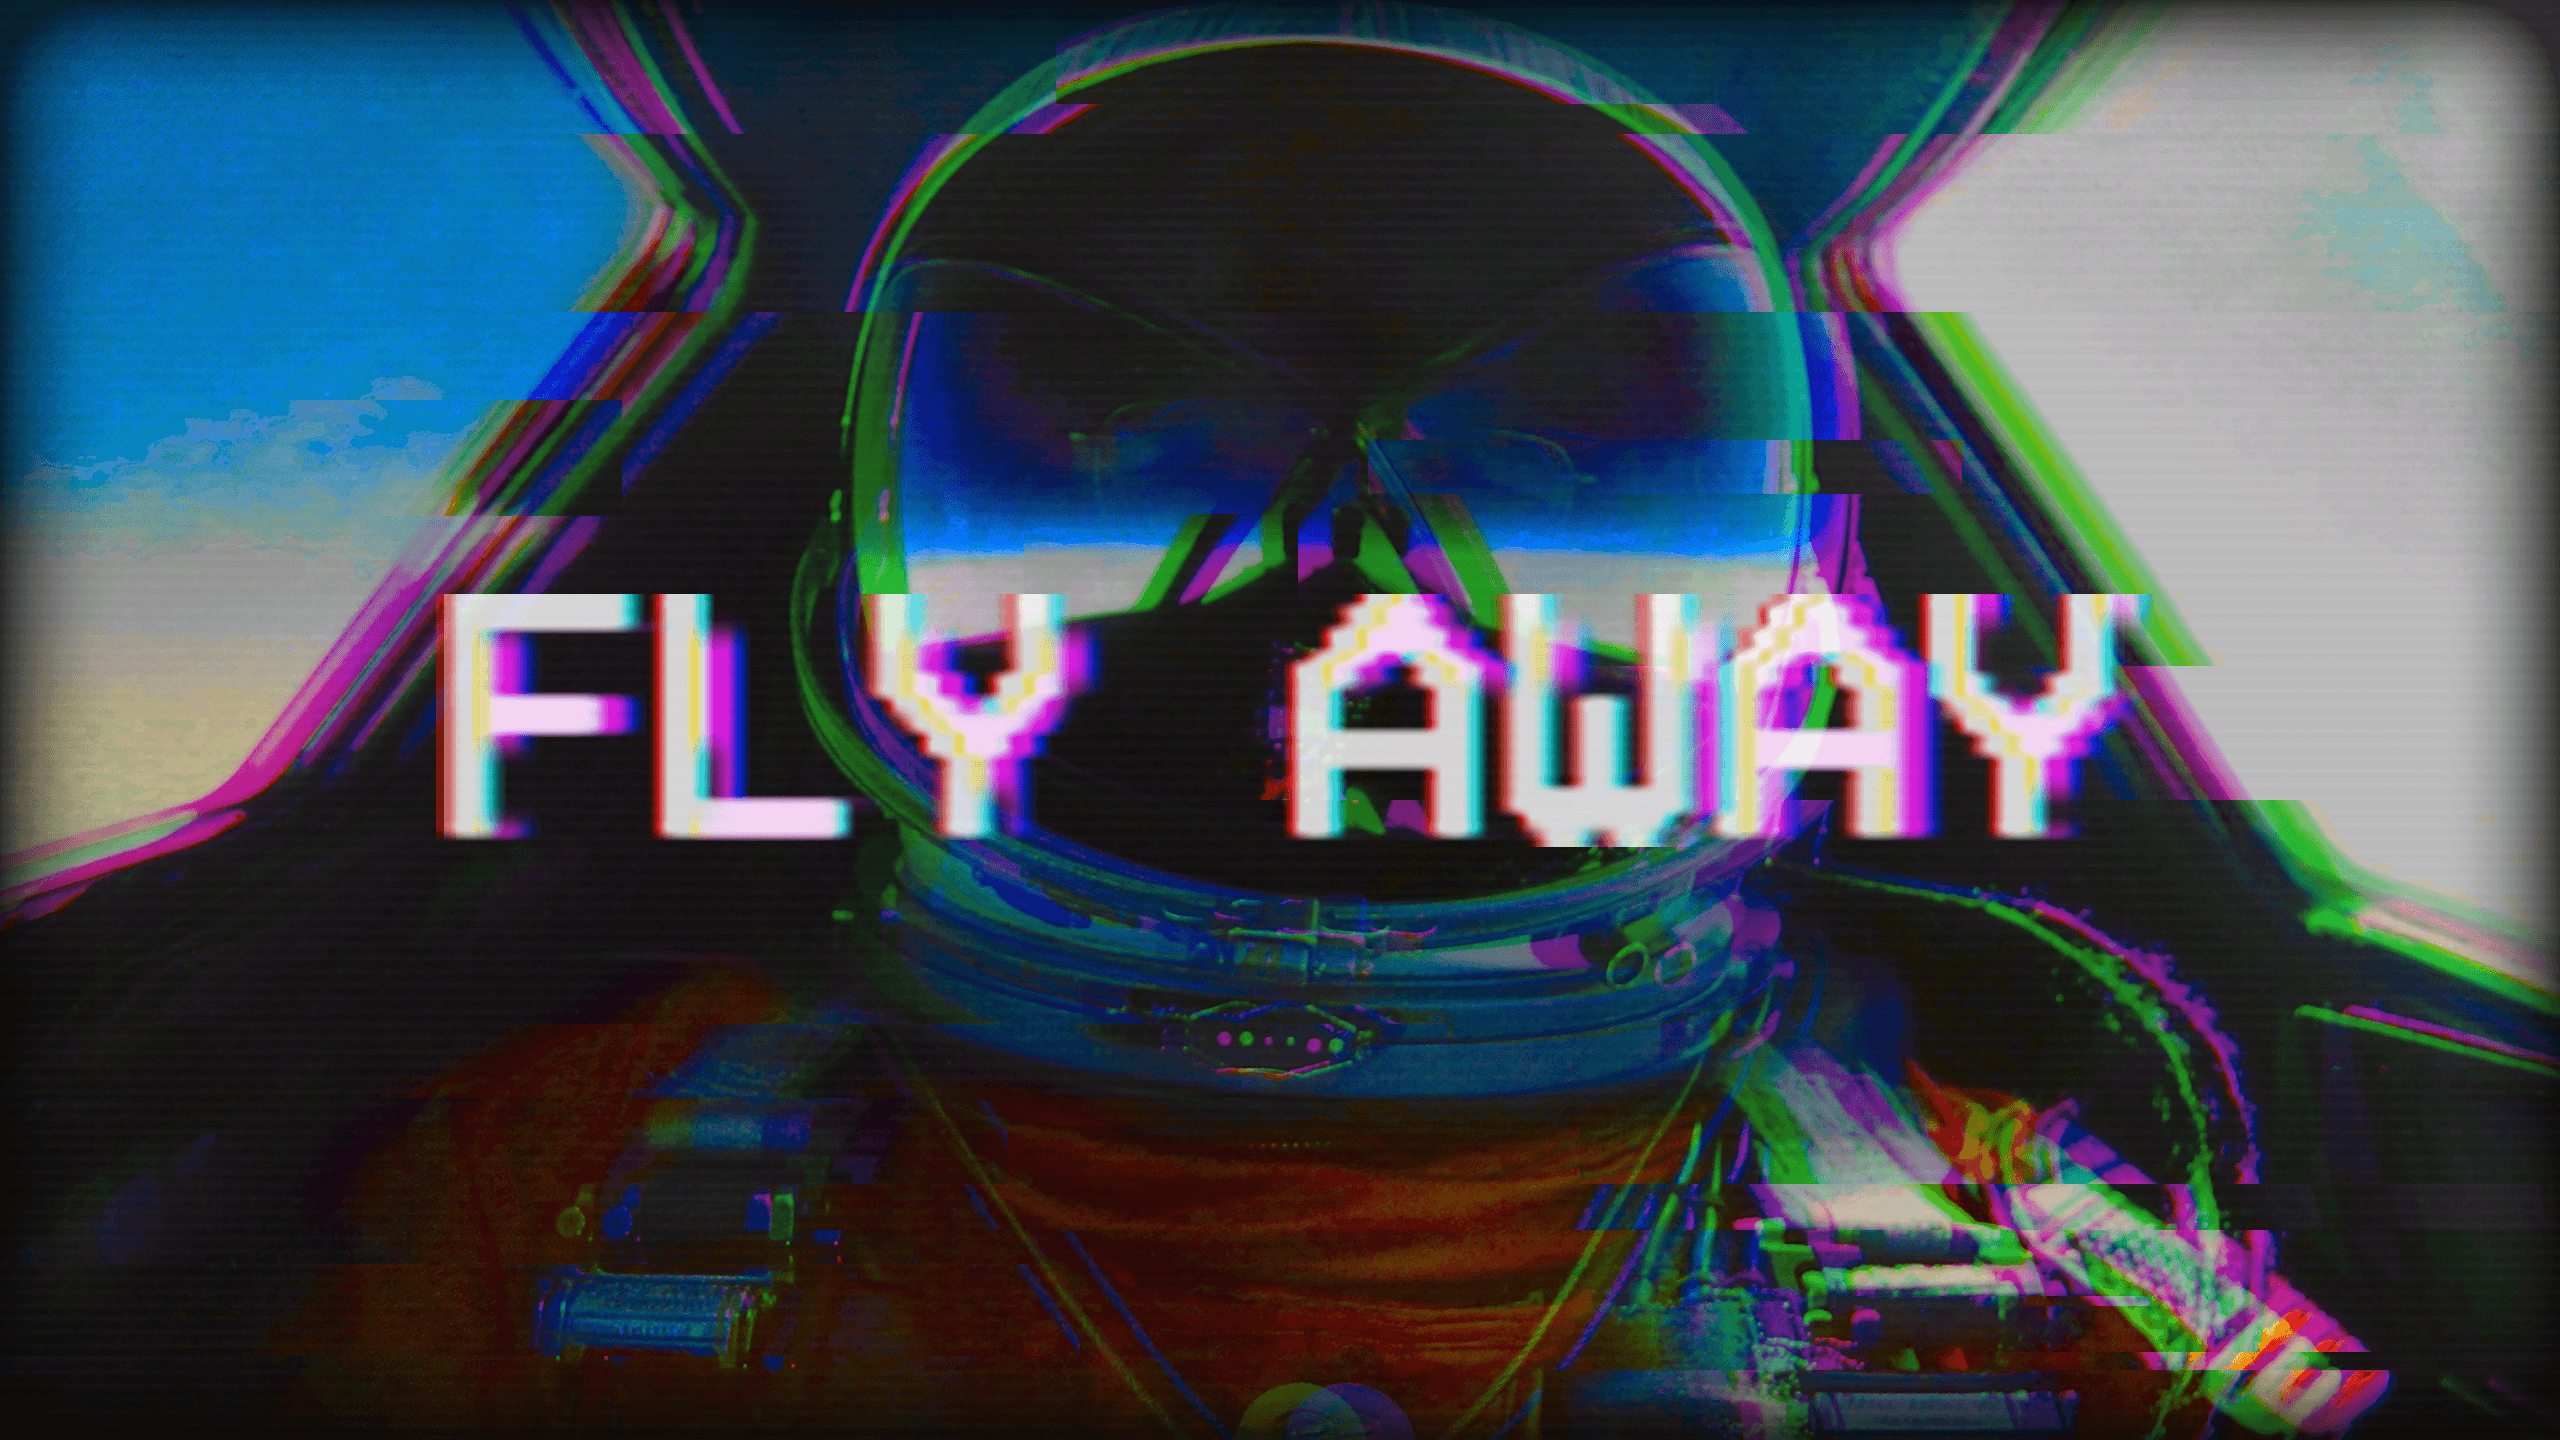 Download the Fly Away Pilot Wallpaper, Fly Away Pilot iPhone